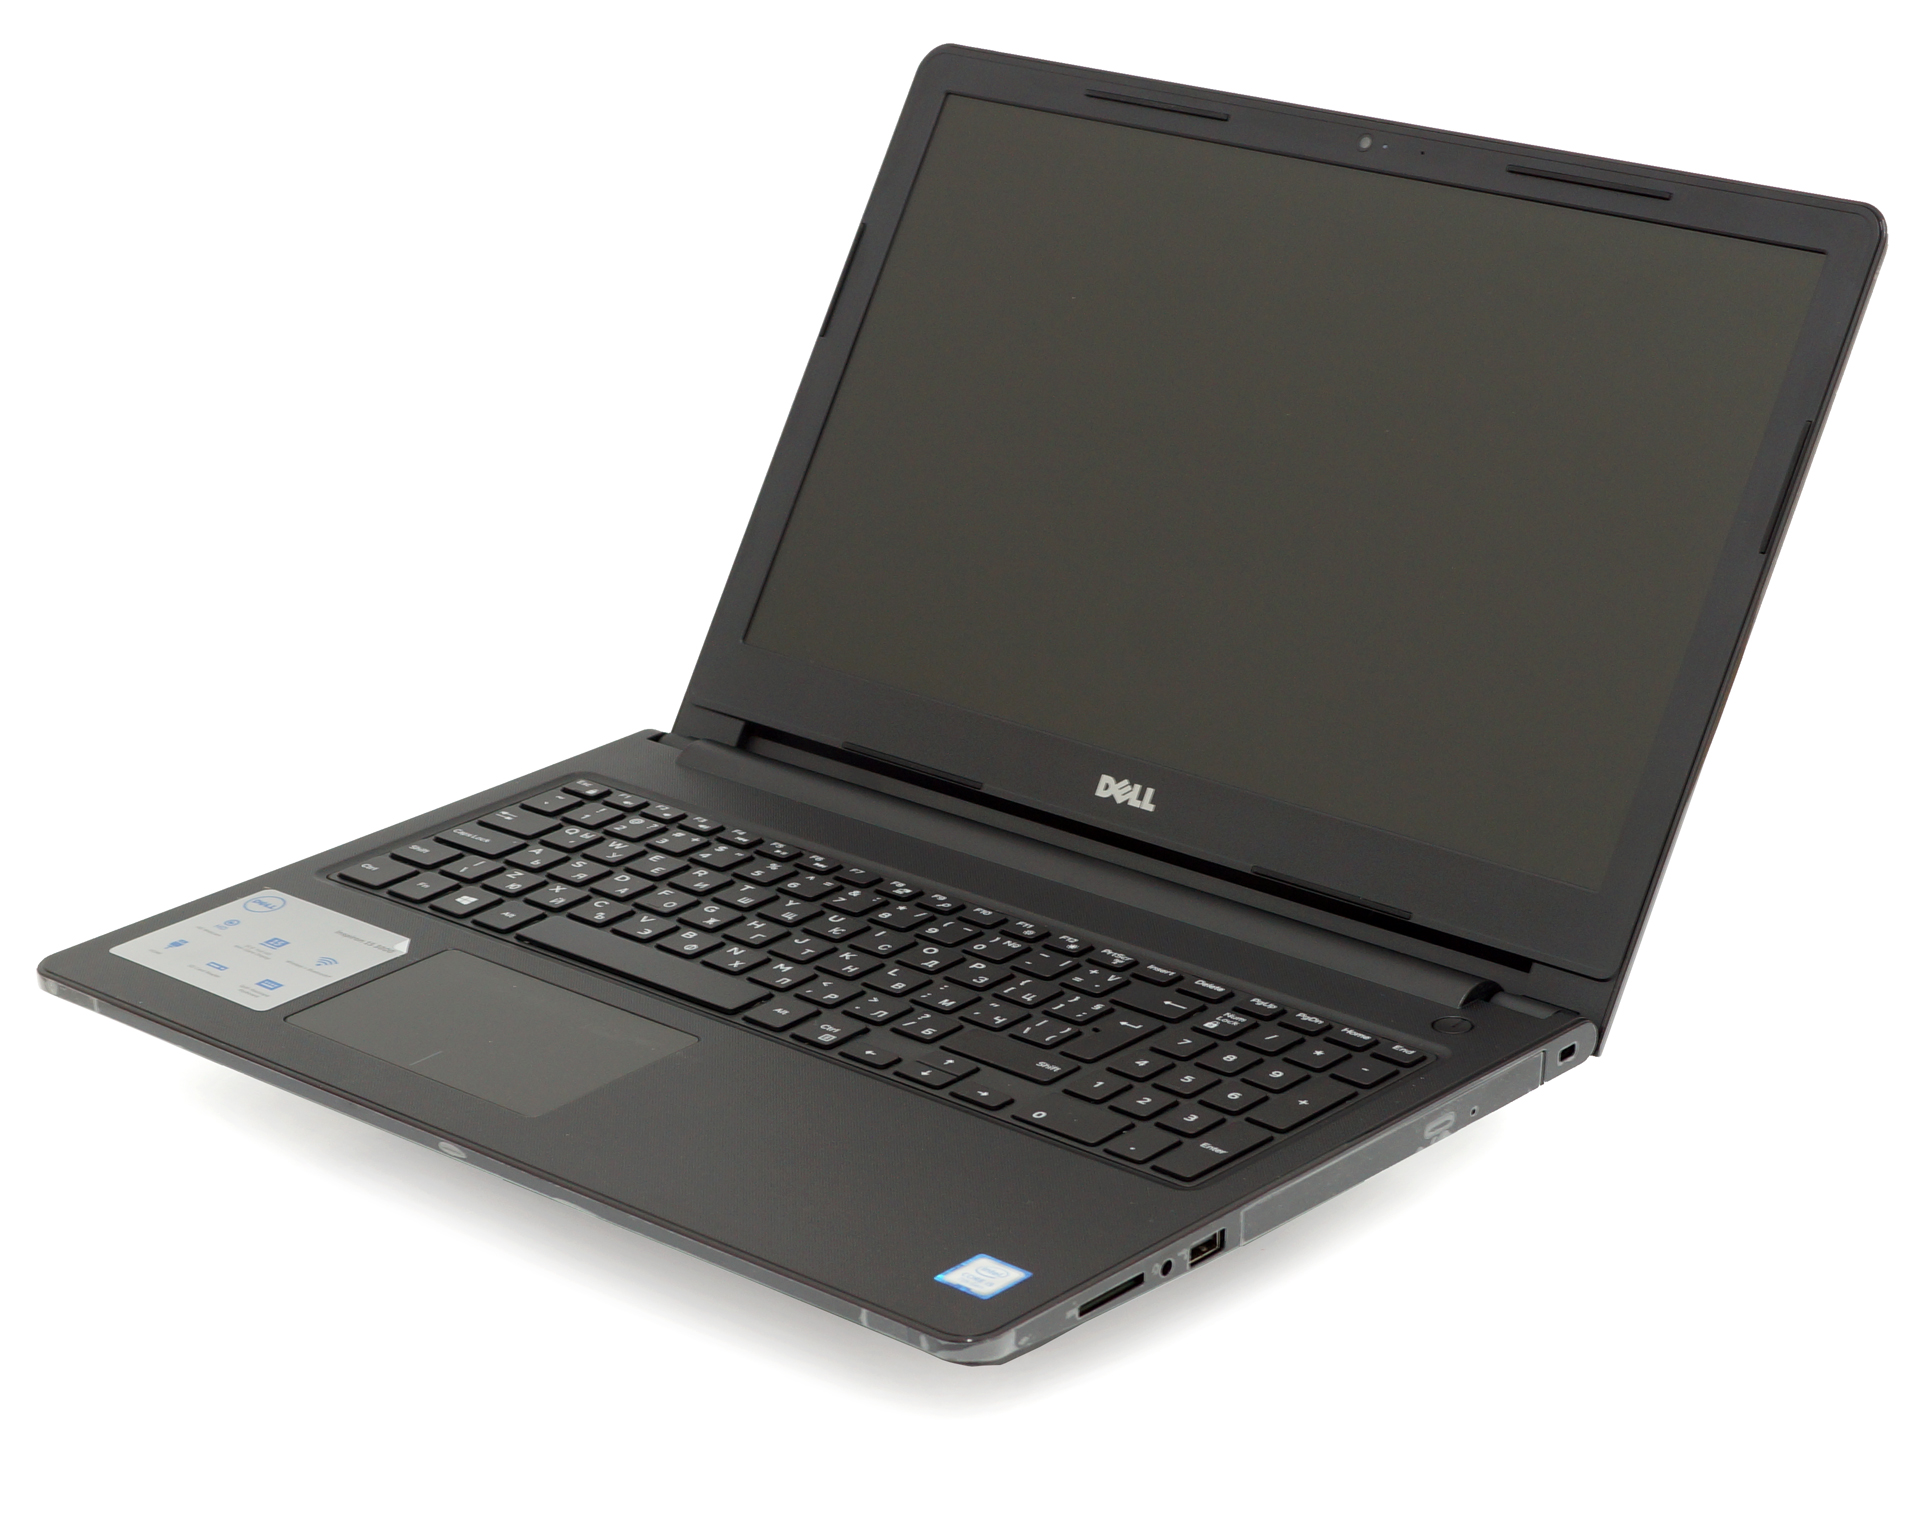 Dell Inspiron 15 Intel Core i3-7130U 8GB 1TB HDD 15.6 HD LED Windows 10  Laptop